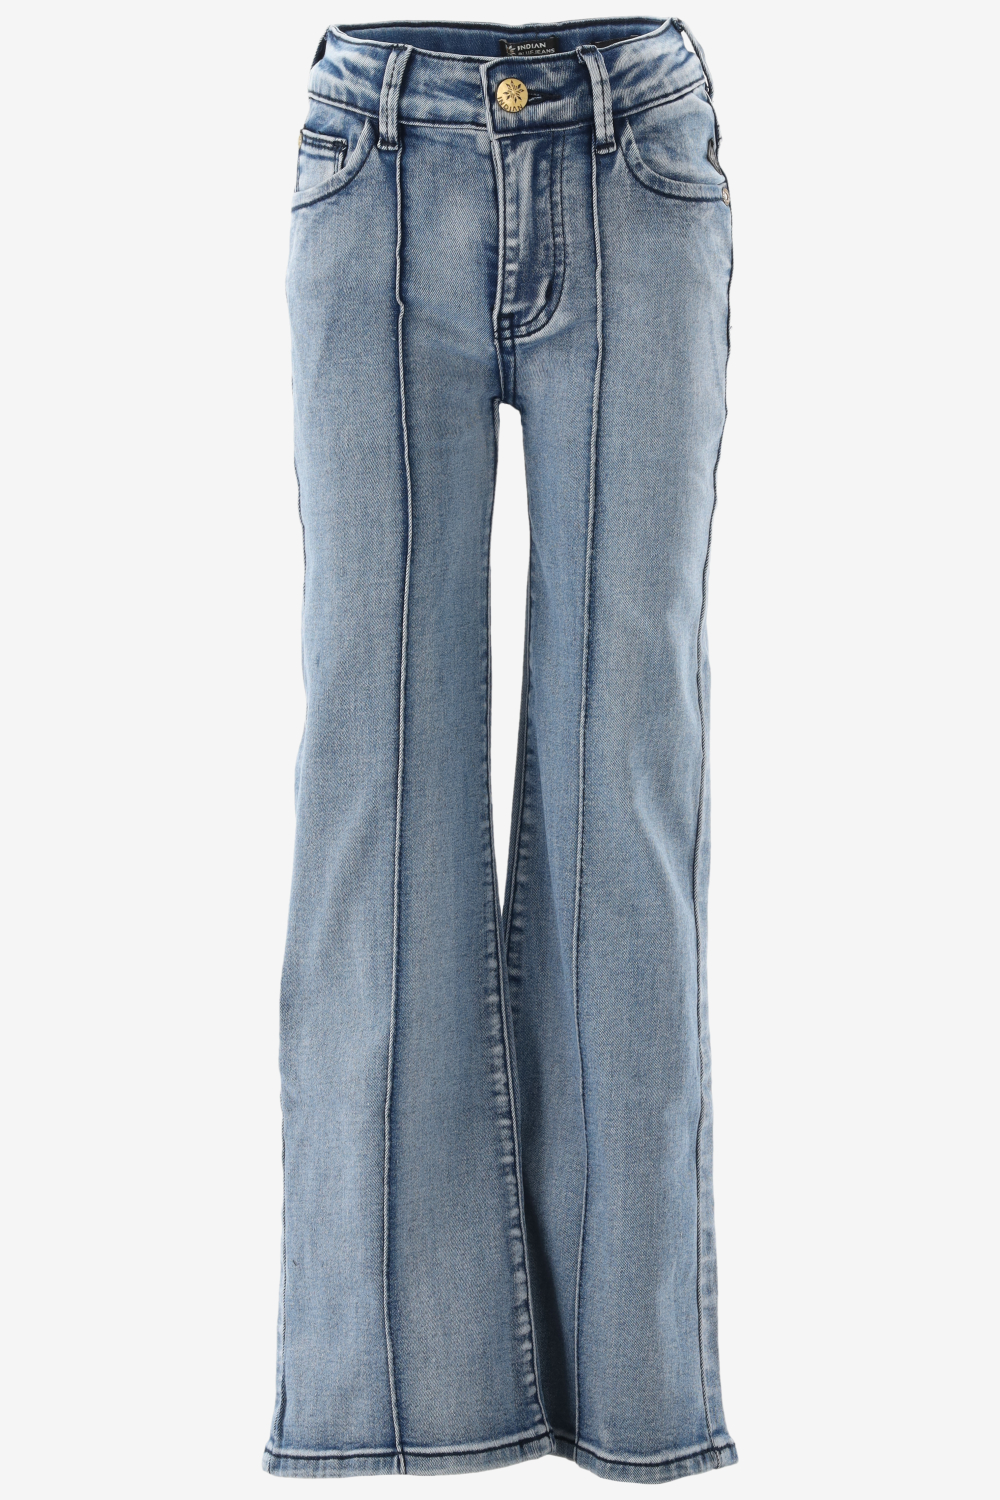 Indian Blue Jeans Lange broek meisje dark denim maat 134